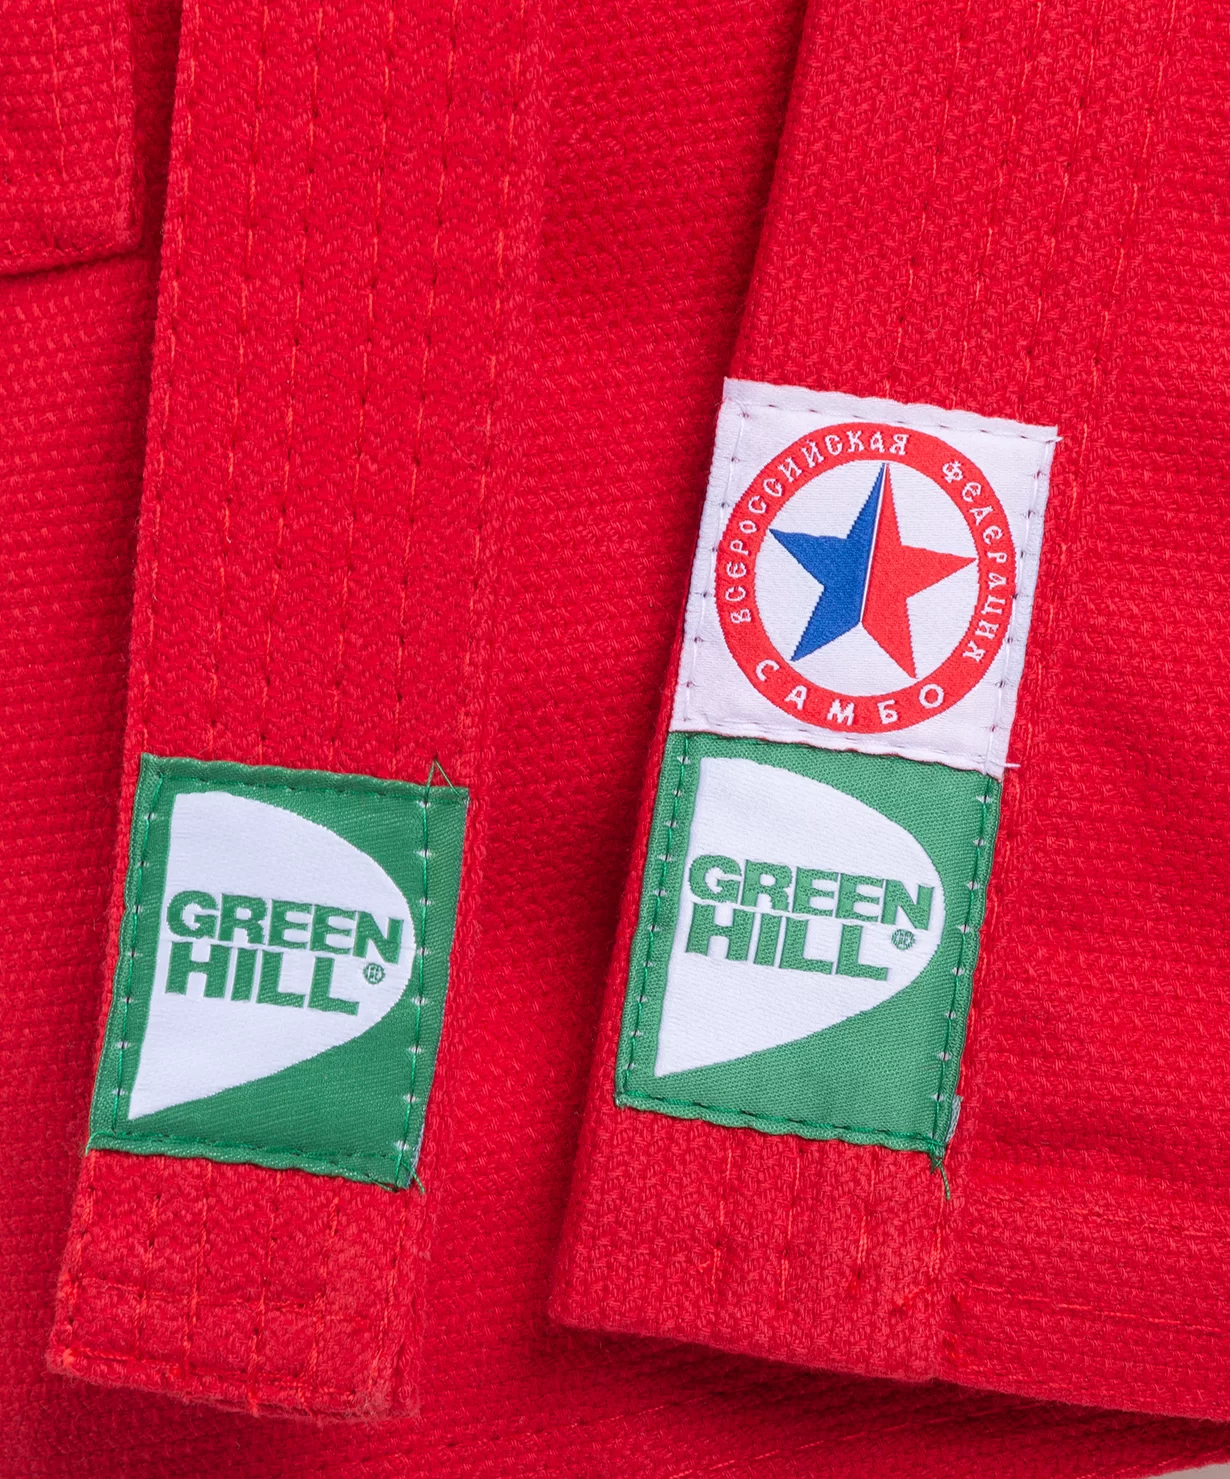 Фото Куртка для самбо JS-302, красная, р.6/190 со склада магазина СпортСЕ